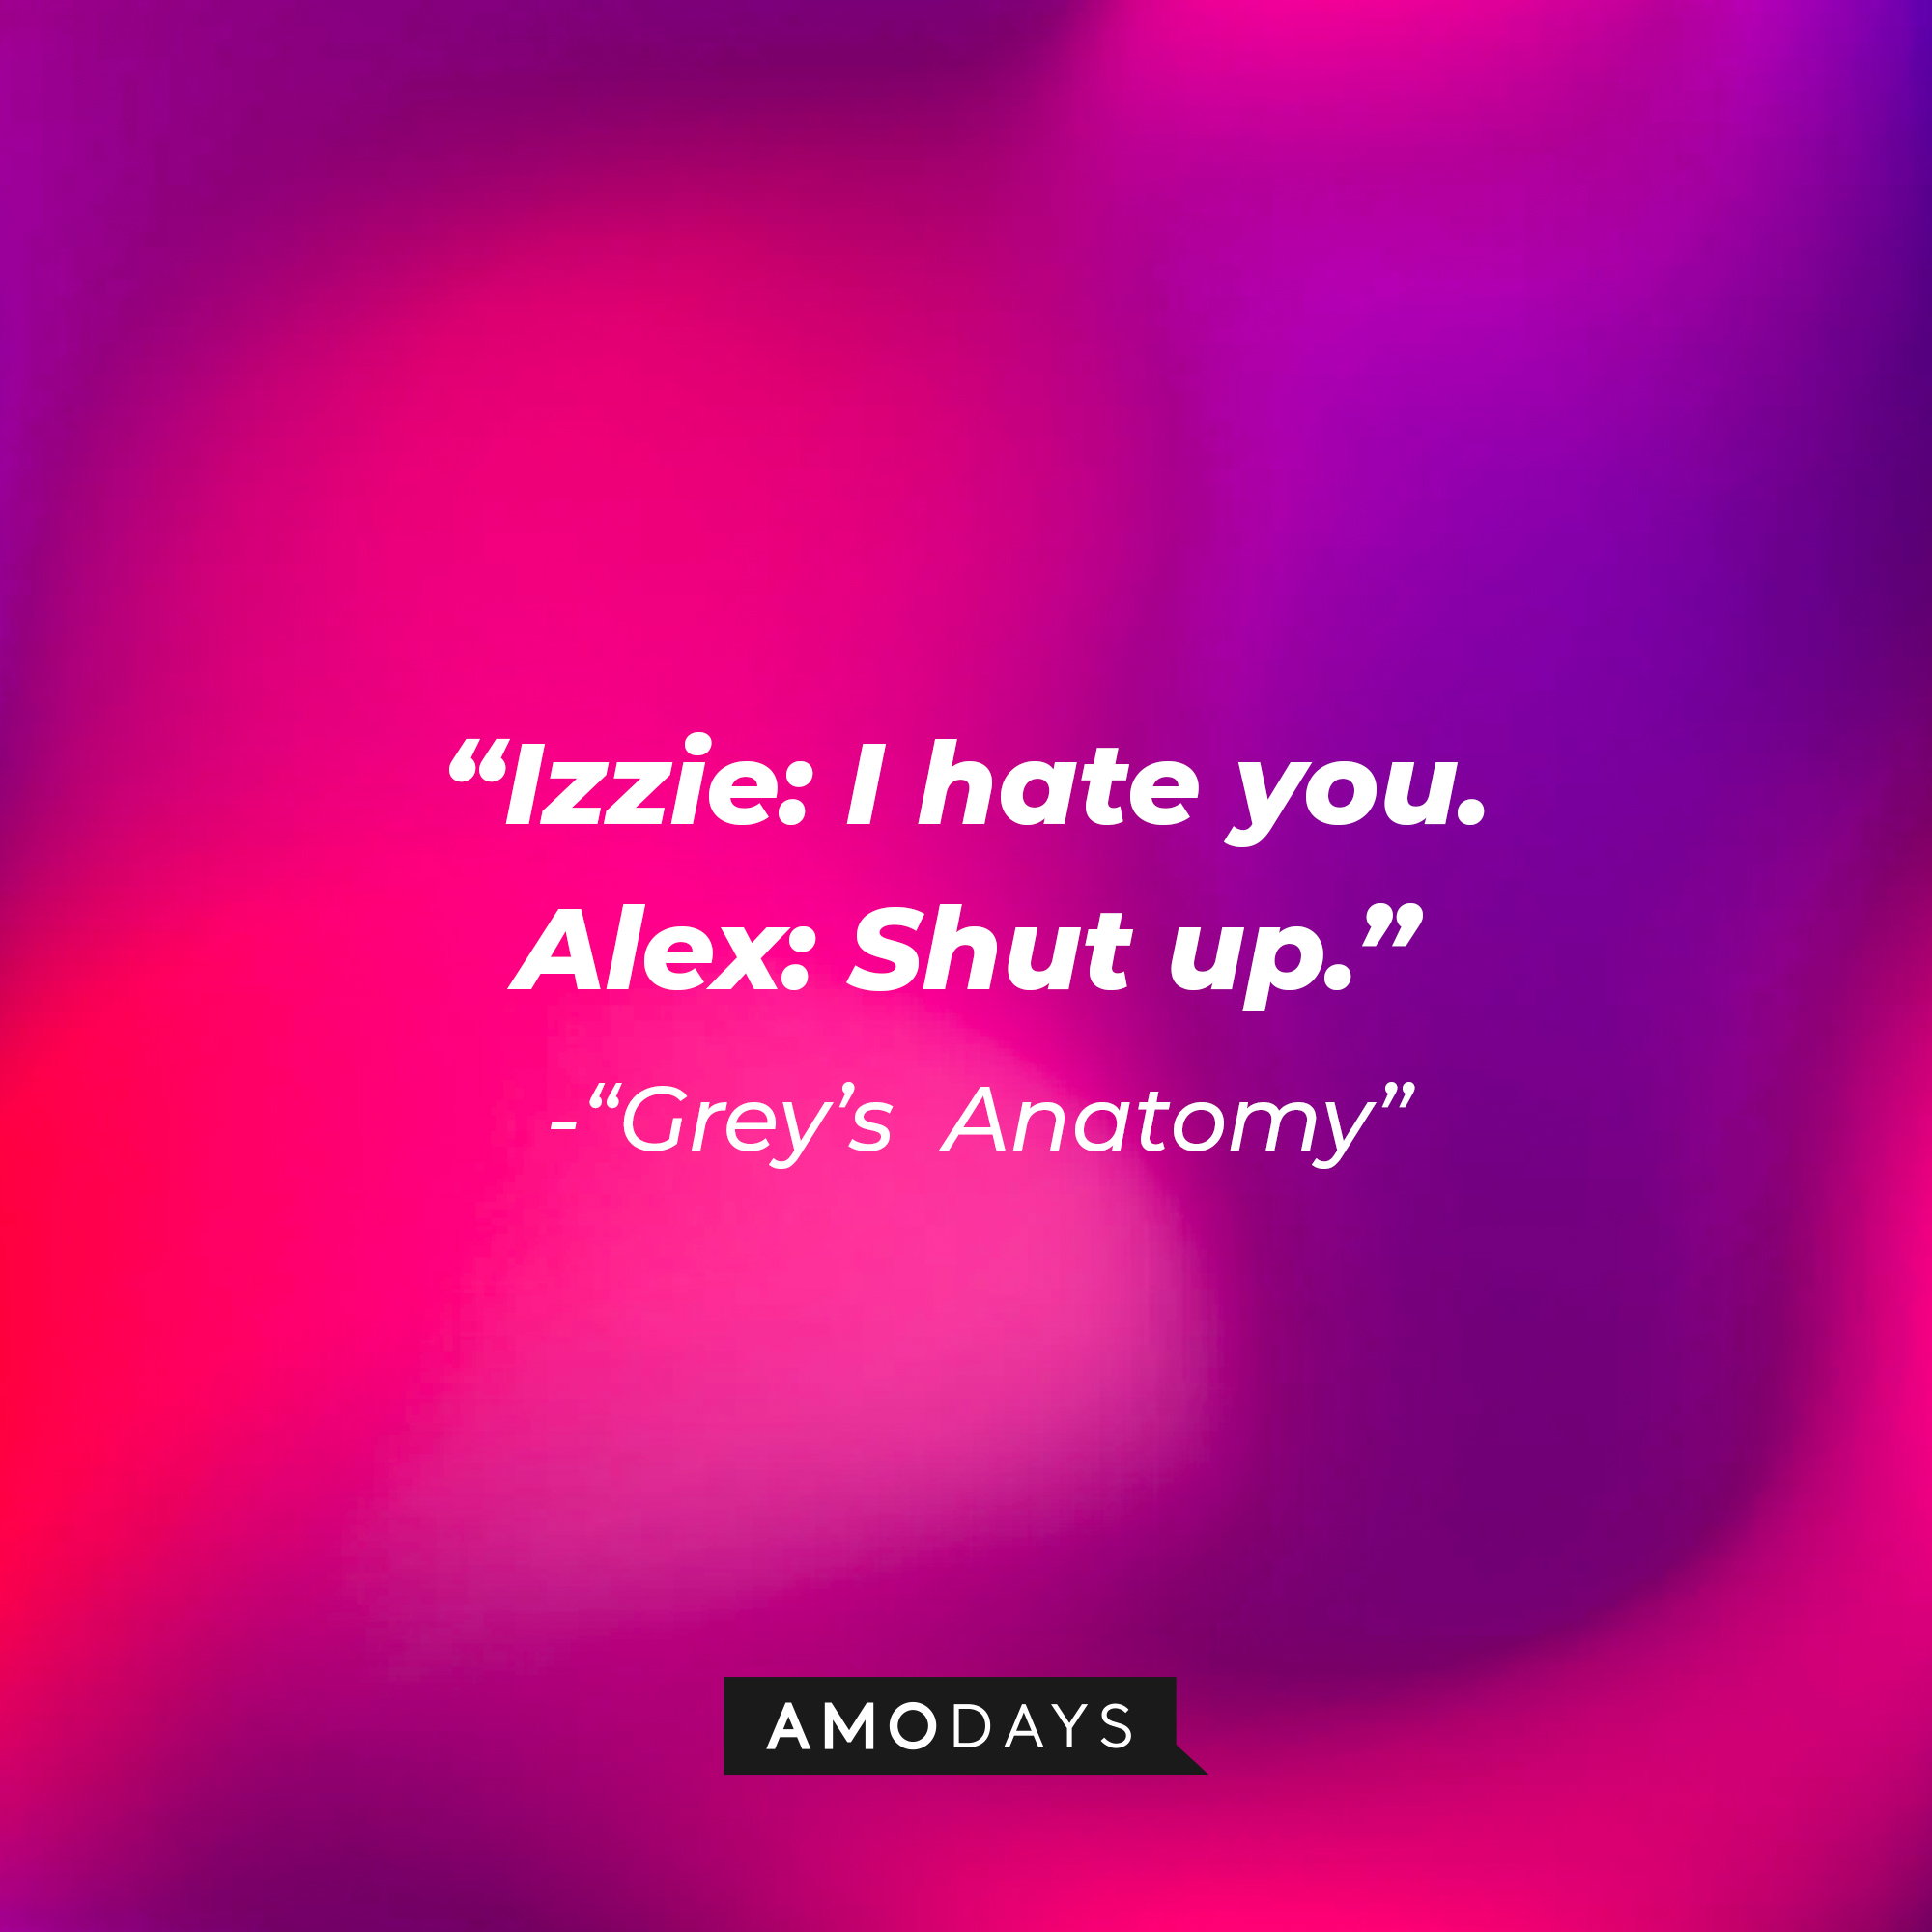 Izzie Stevens's quote: "I hate you." Alex: "Shut up." | Image: Amodays